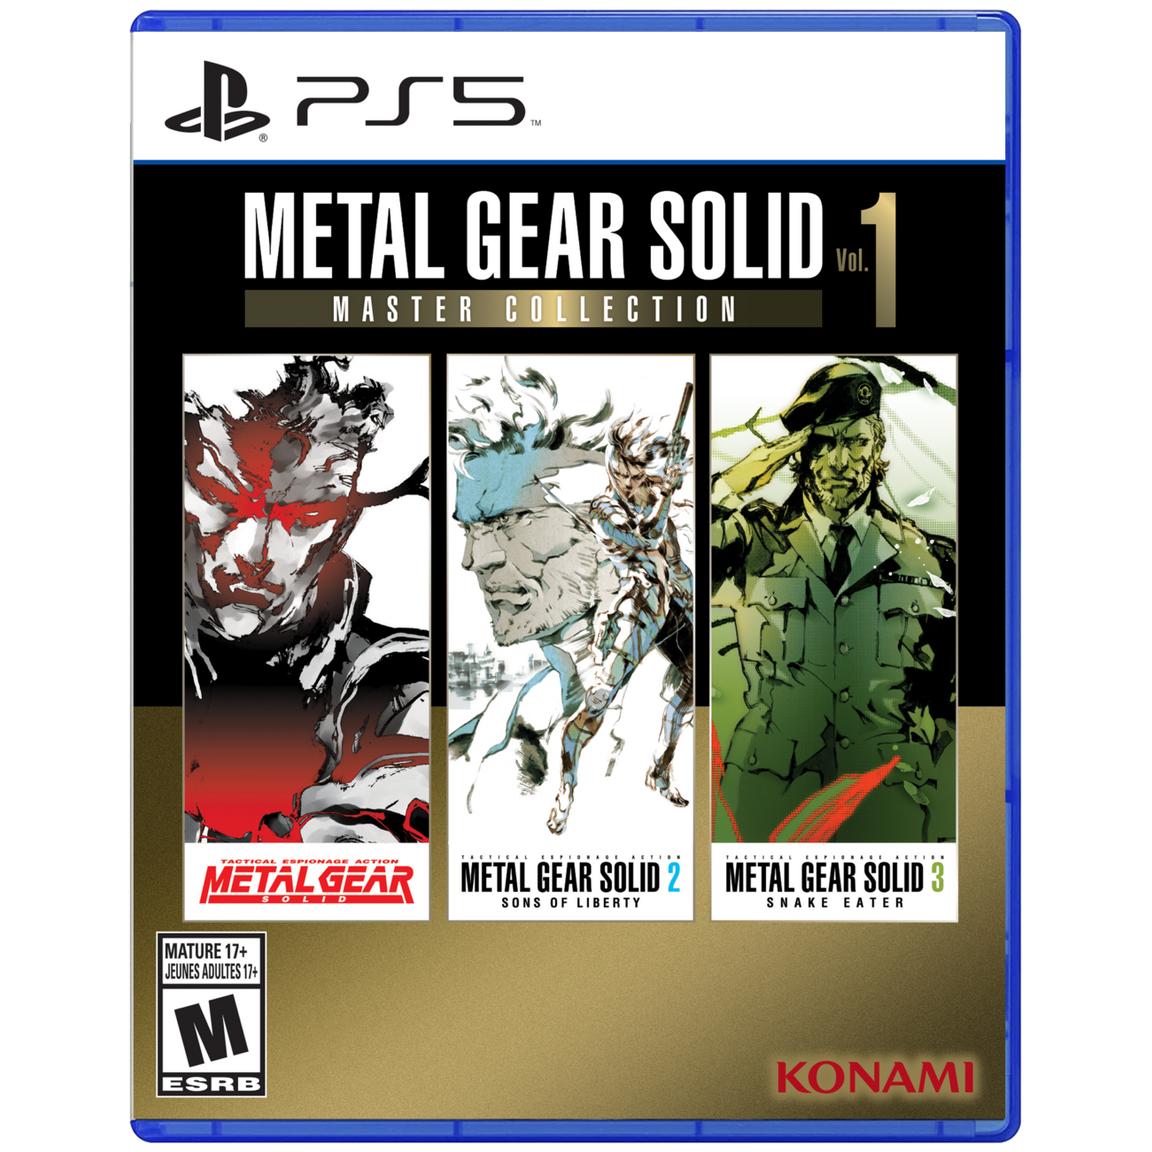 Видеоигра Metal Gear Solid: Master Collection Vol.1 - PlayStation 5 metal gear solid master collection vol 1 metal gear solid 3 snake eater steam pc регион активации евросоюз